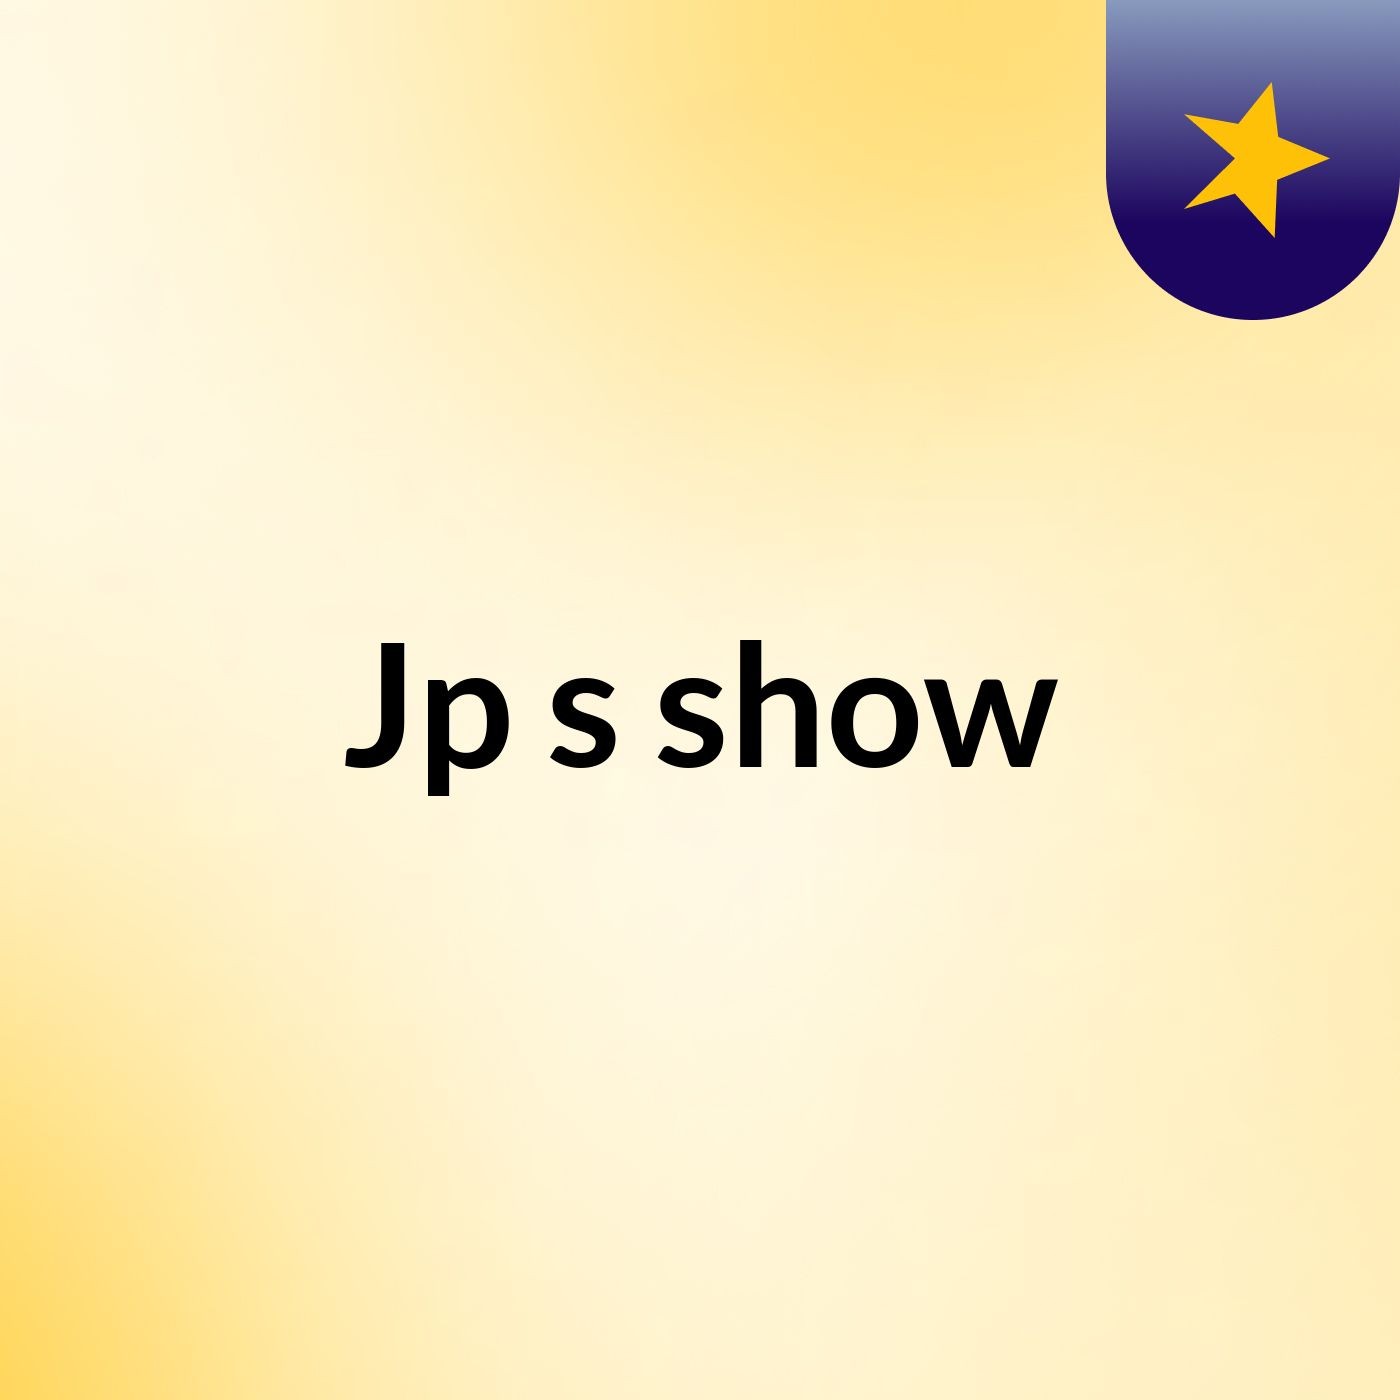 Jp's show